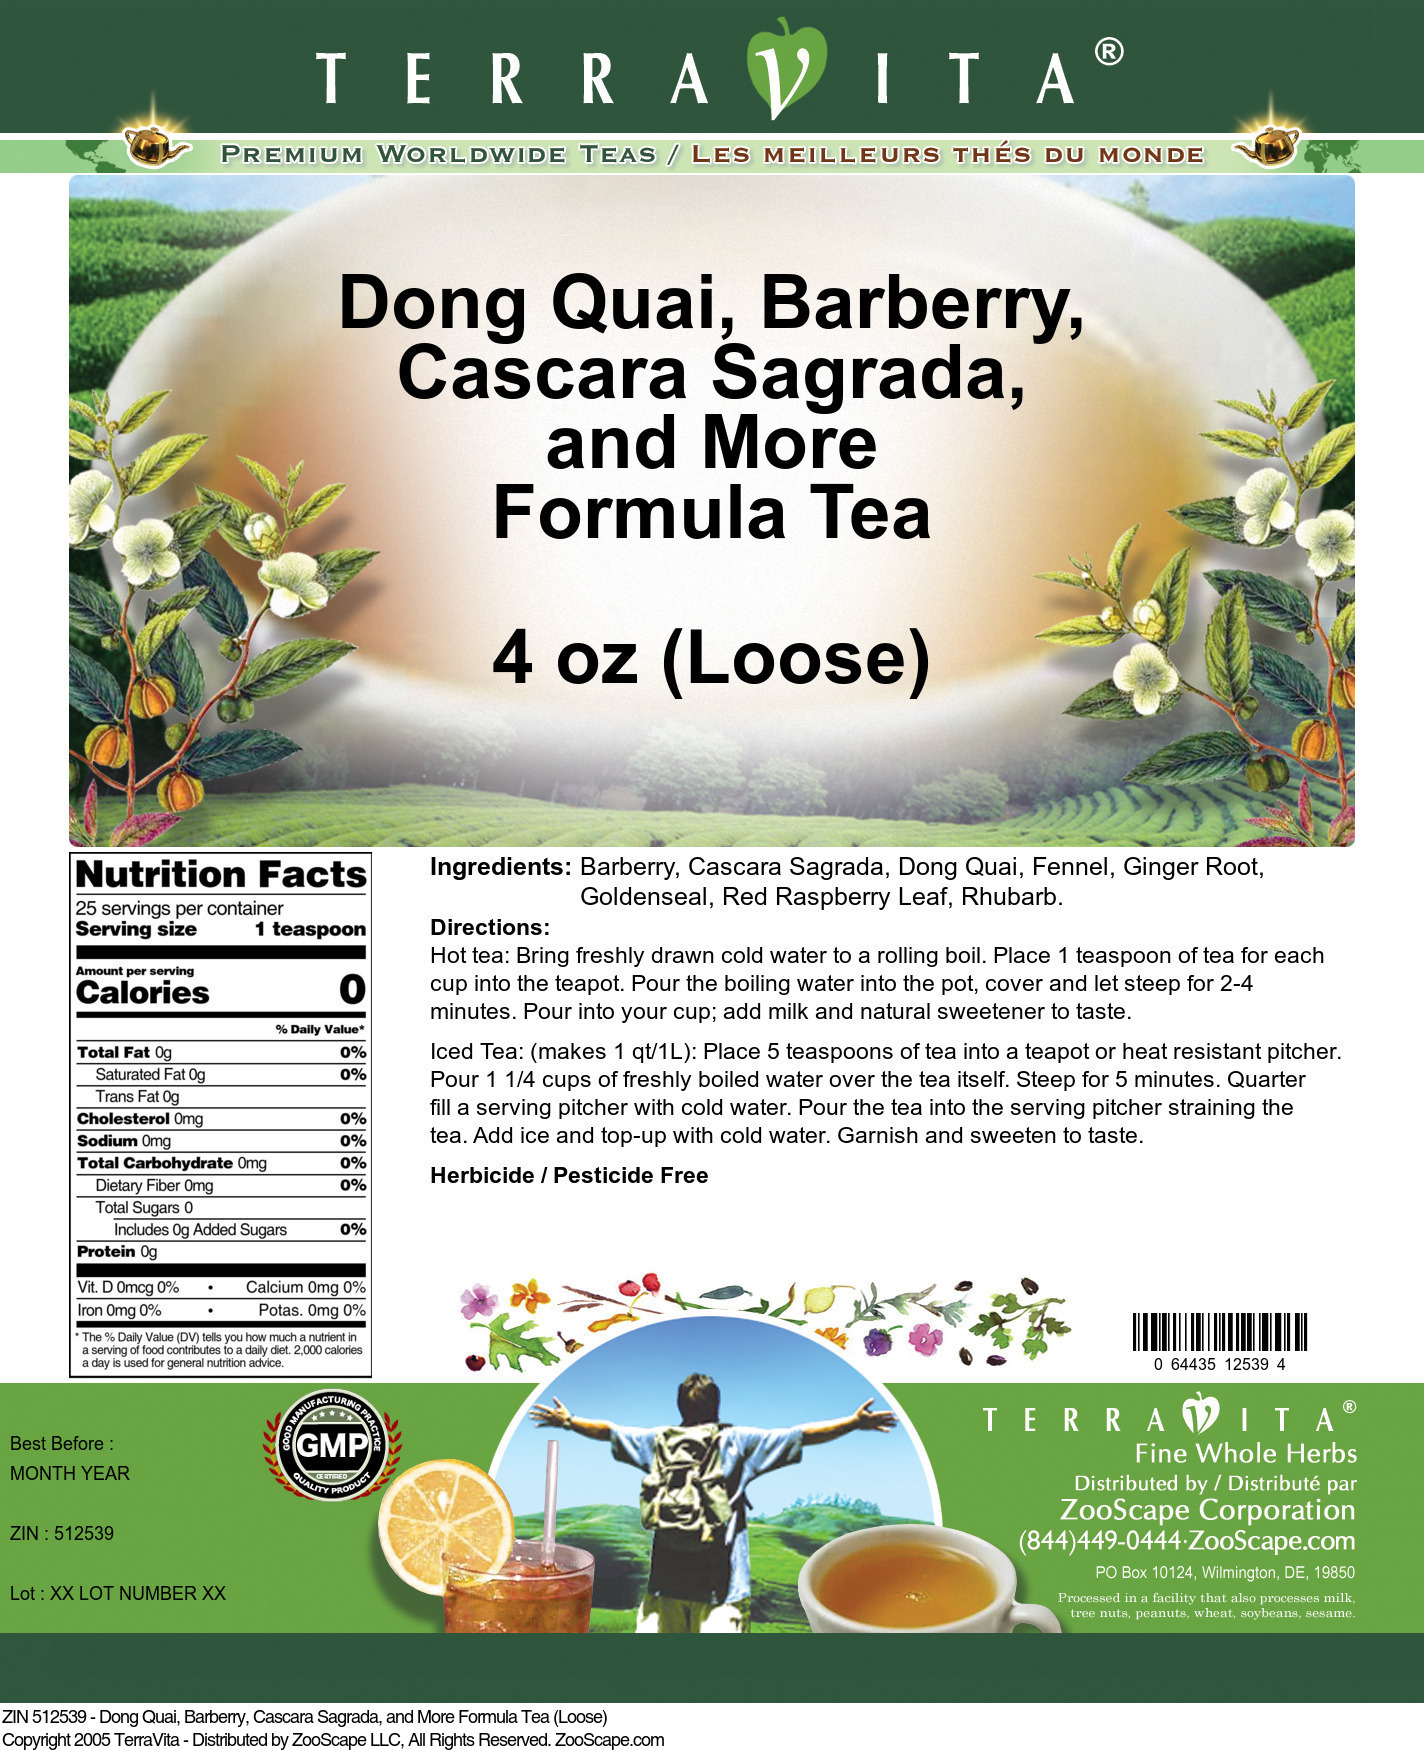 Dong Quai, Barberry, Cascara Sagrada, and More Formula Tea (Loose) - Label